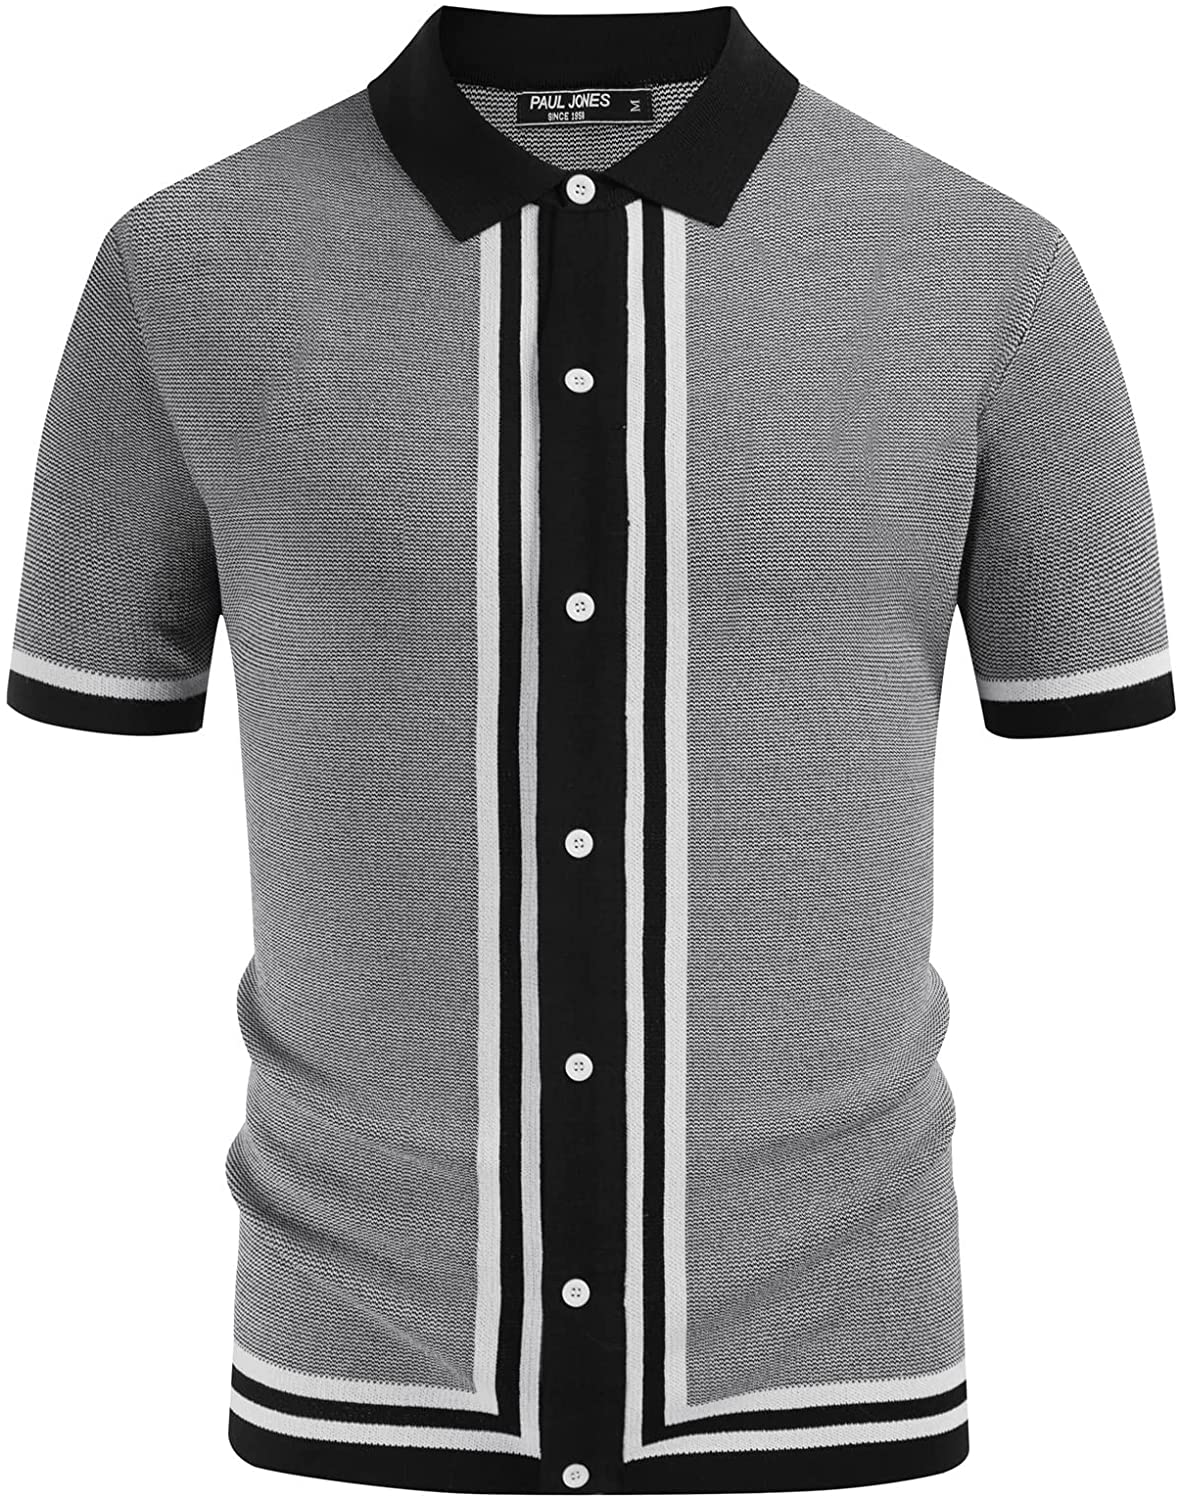 PJ PAUL JONES Men's Vintage Stripe Knit Polo Shirts Stylish Button Down Cardigan Sweater